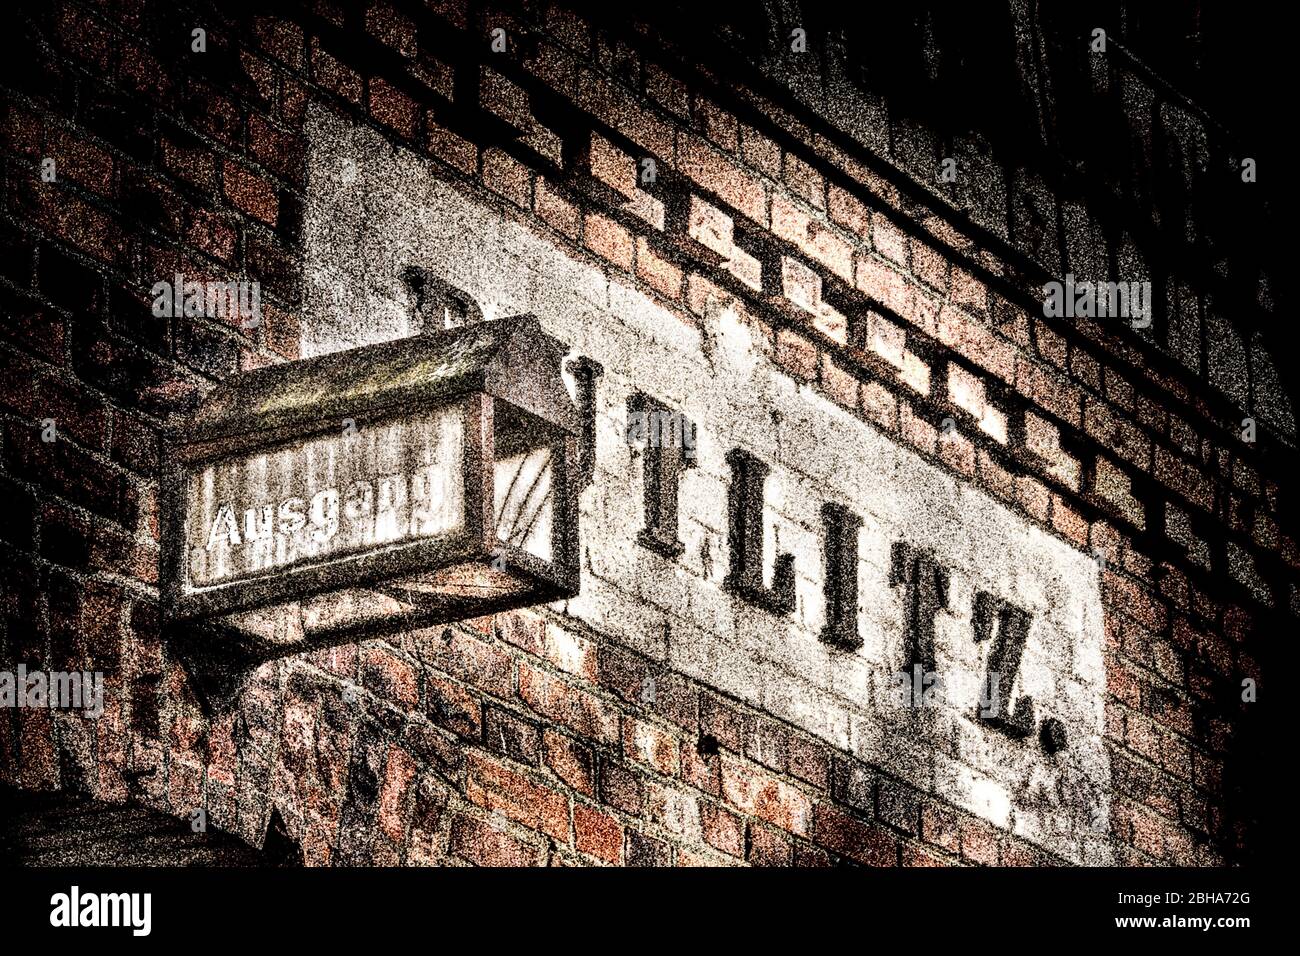 Weathered sign, brick wall, station name, digitally edited, RailArt Stock Photo